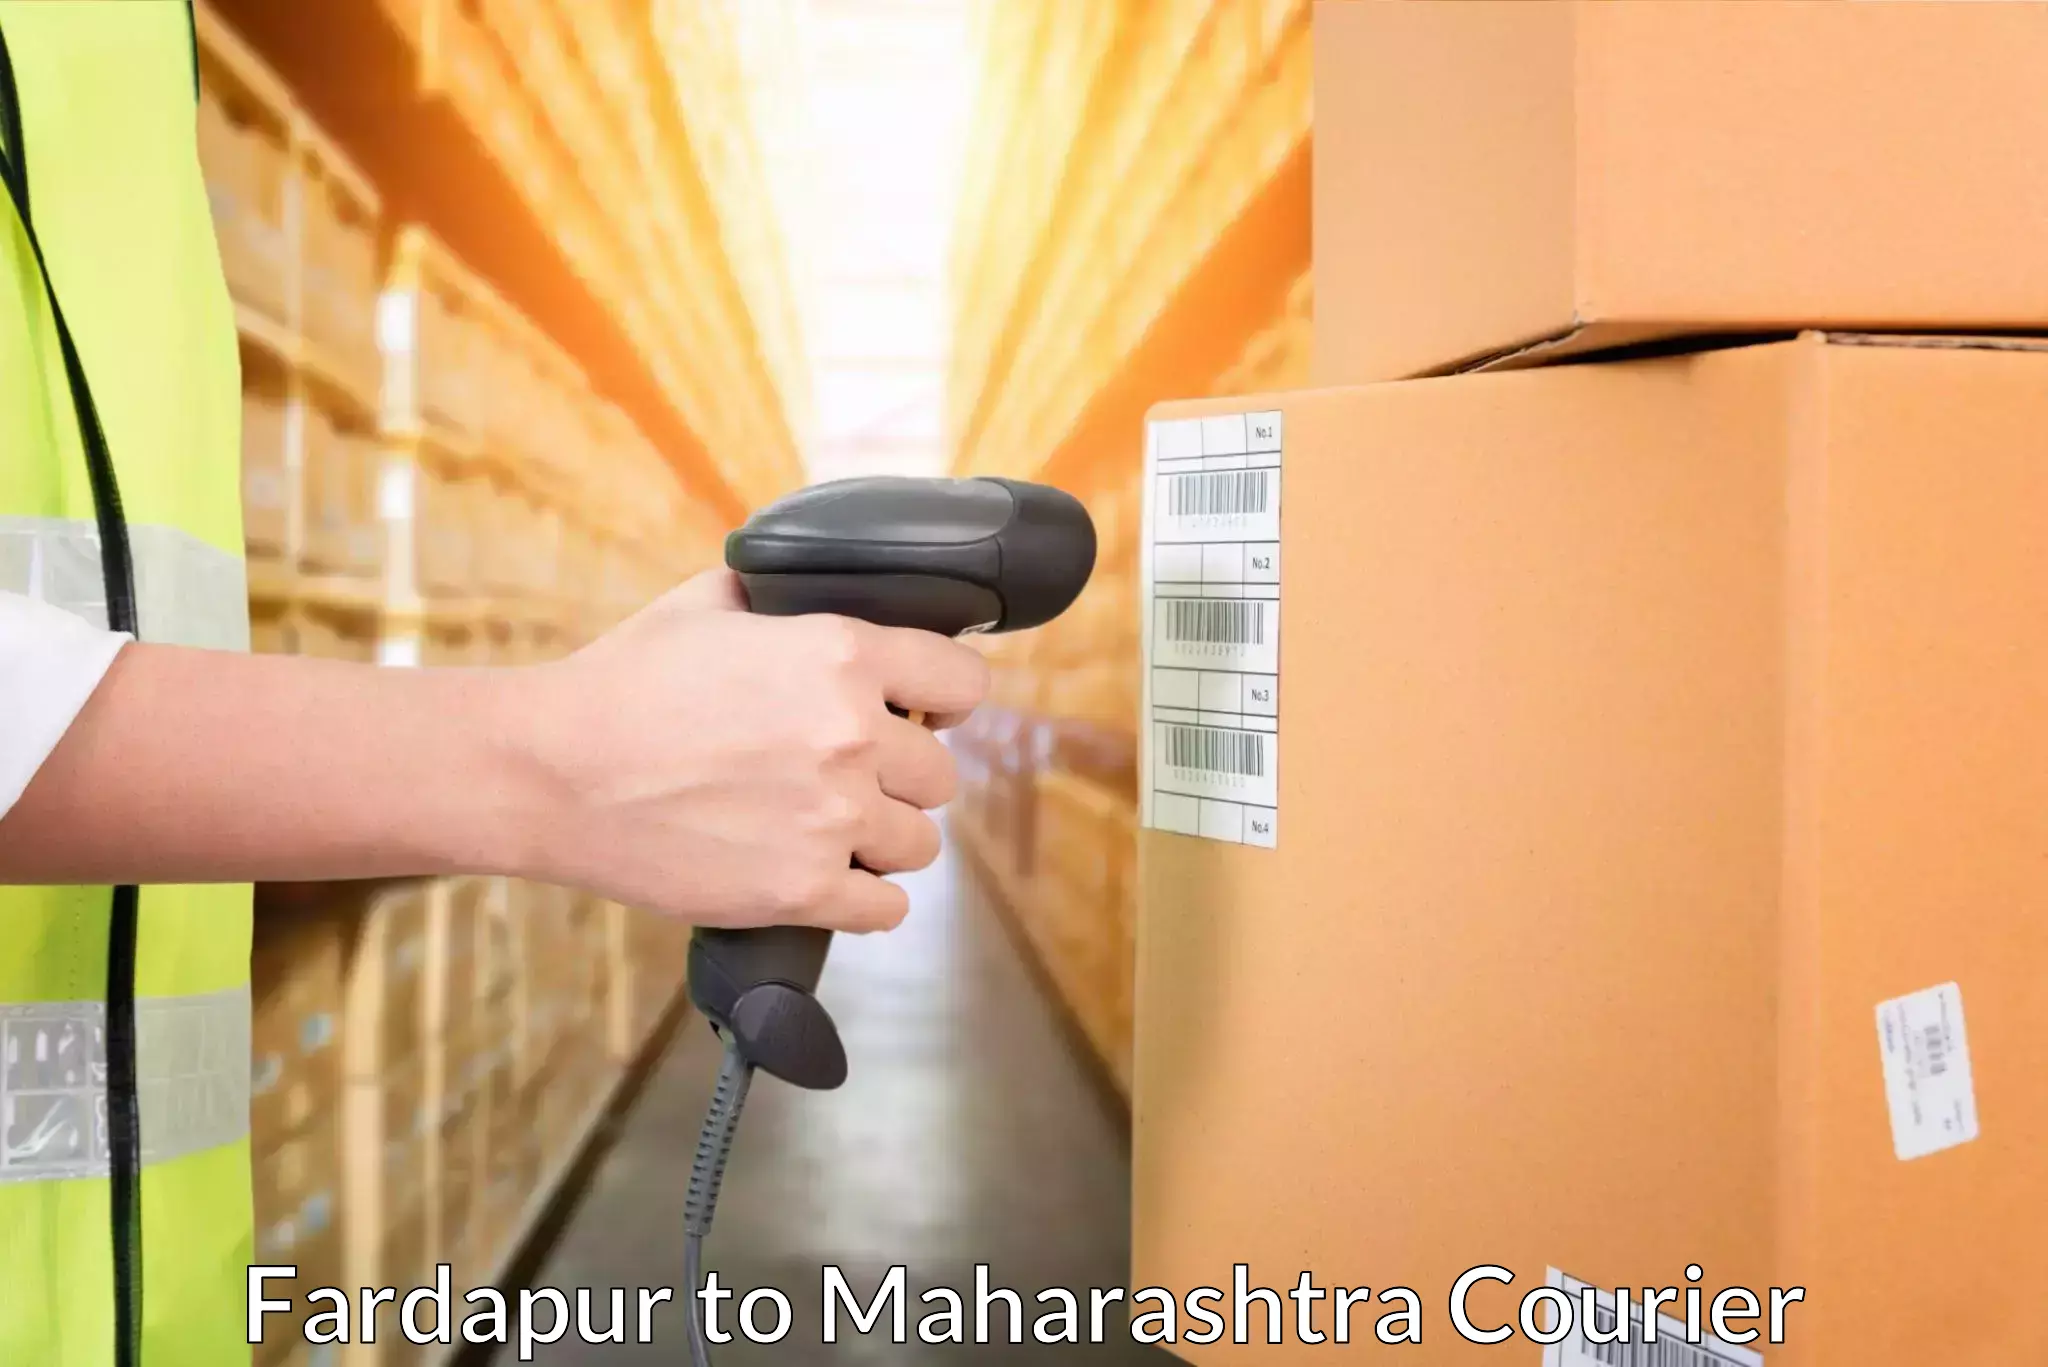 Global logistics network Fardapur to Amdapur